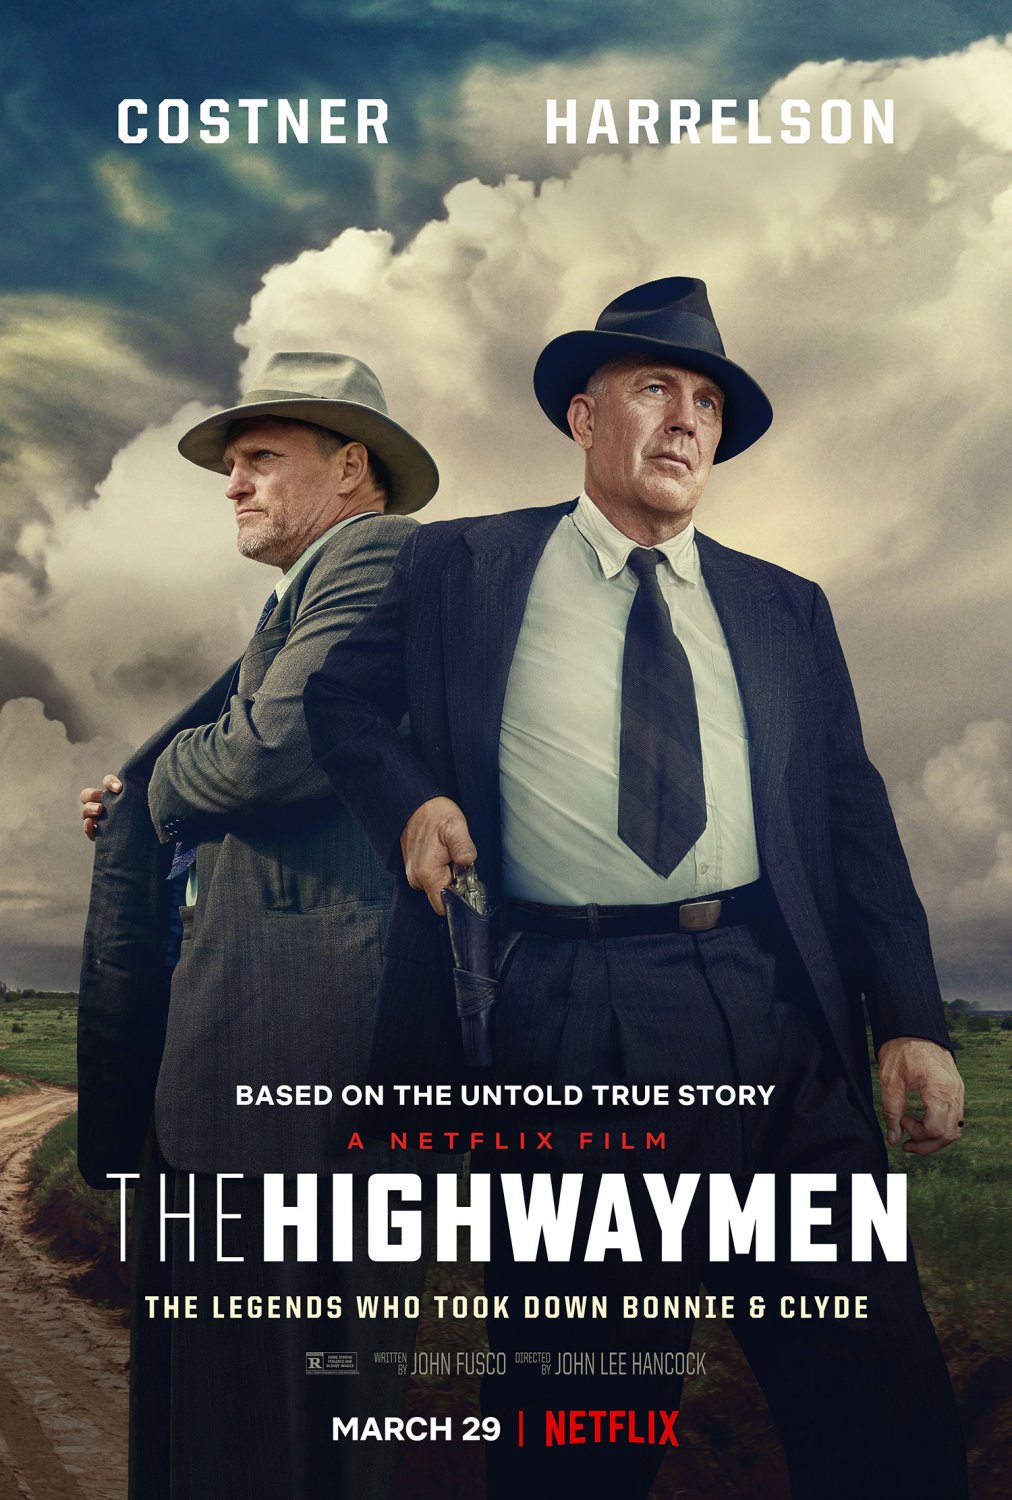 The Highwaymen DVD 2019 Movie